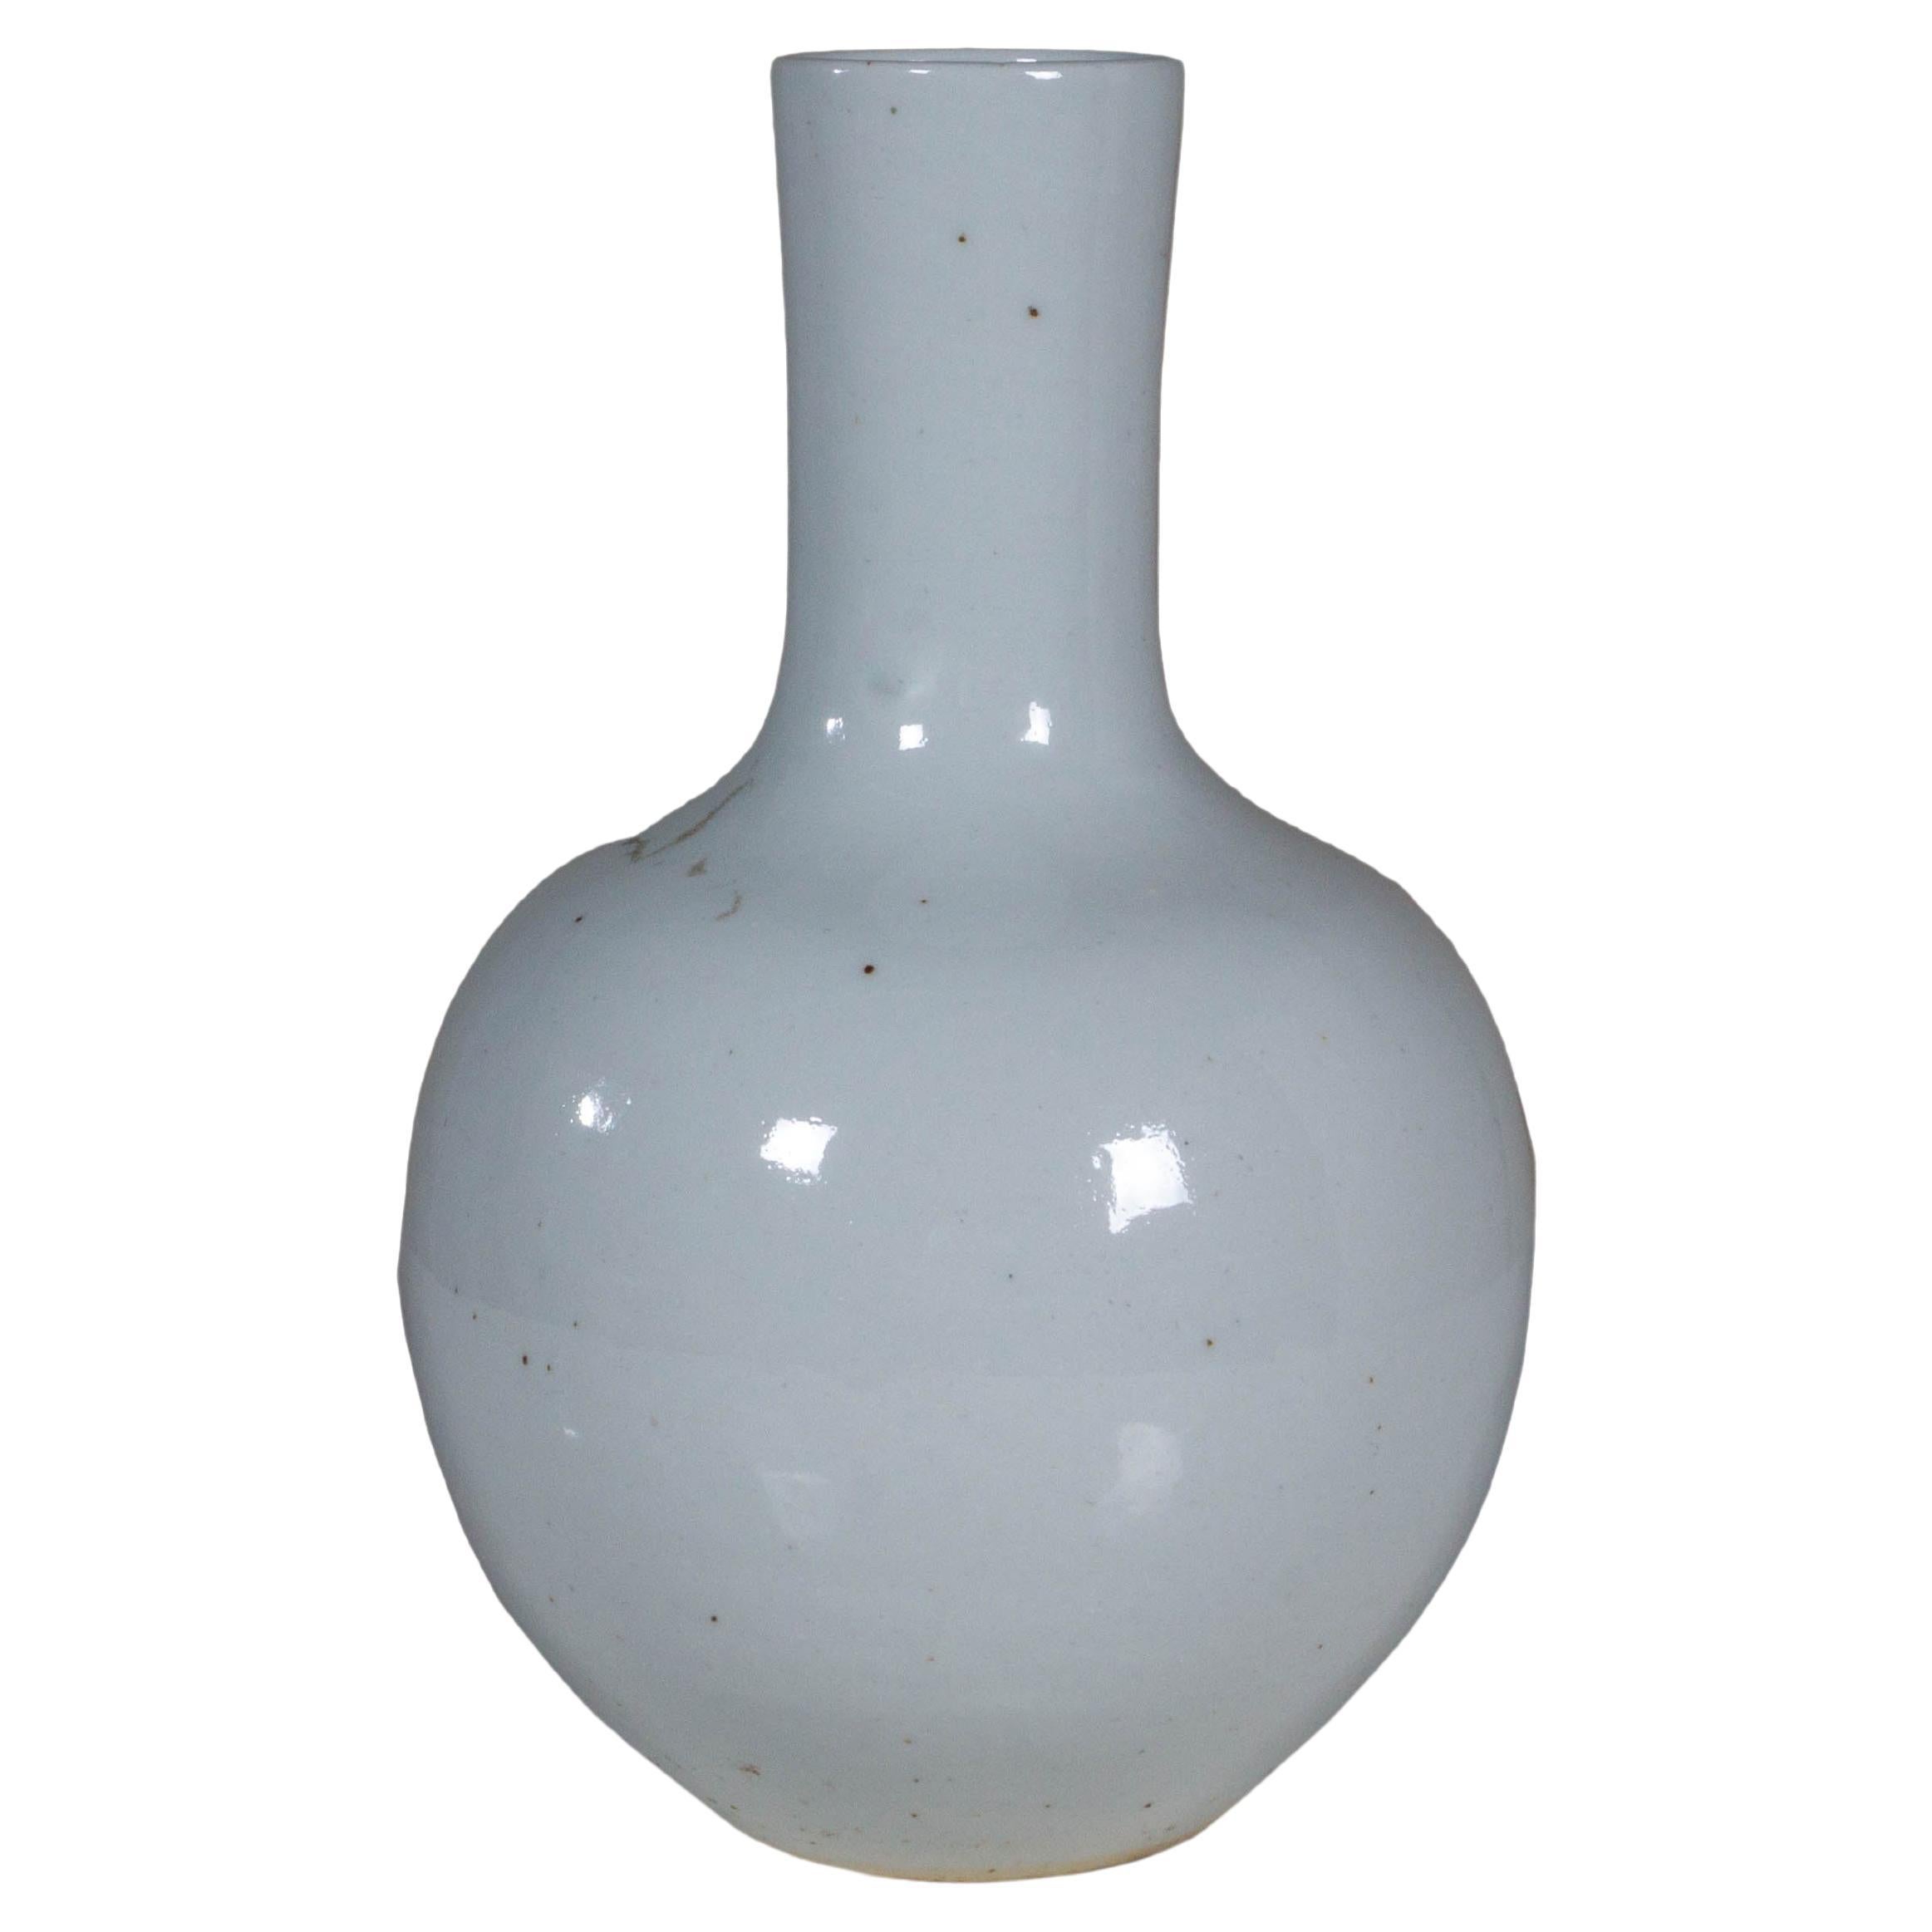 Small White Ceramic Vase 